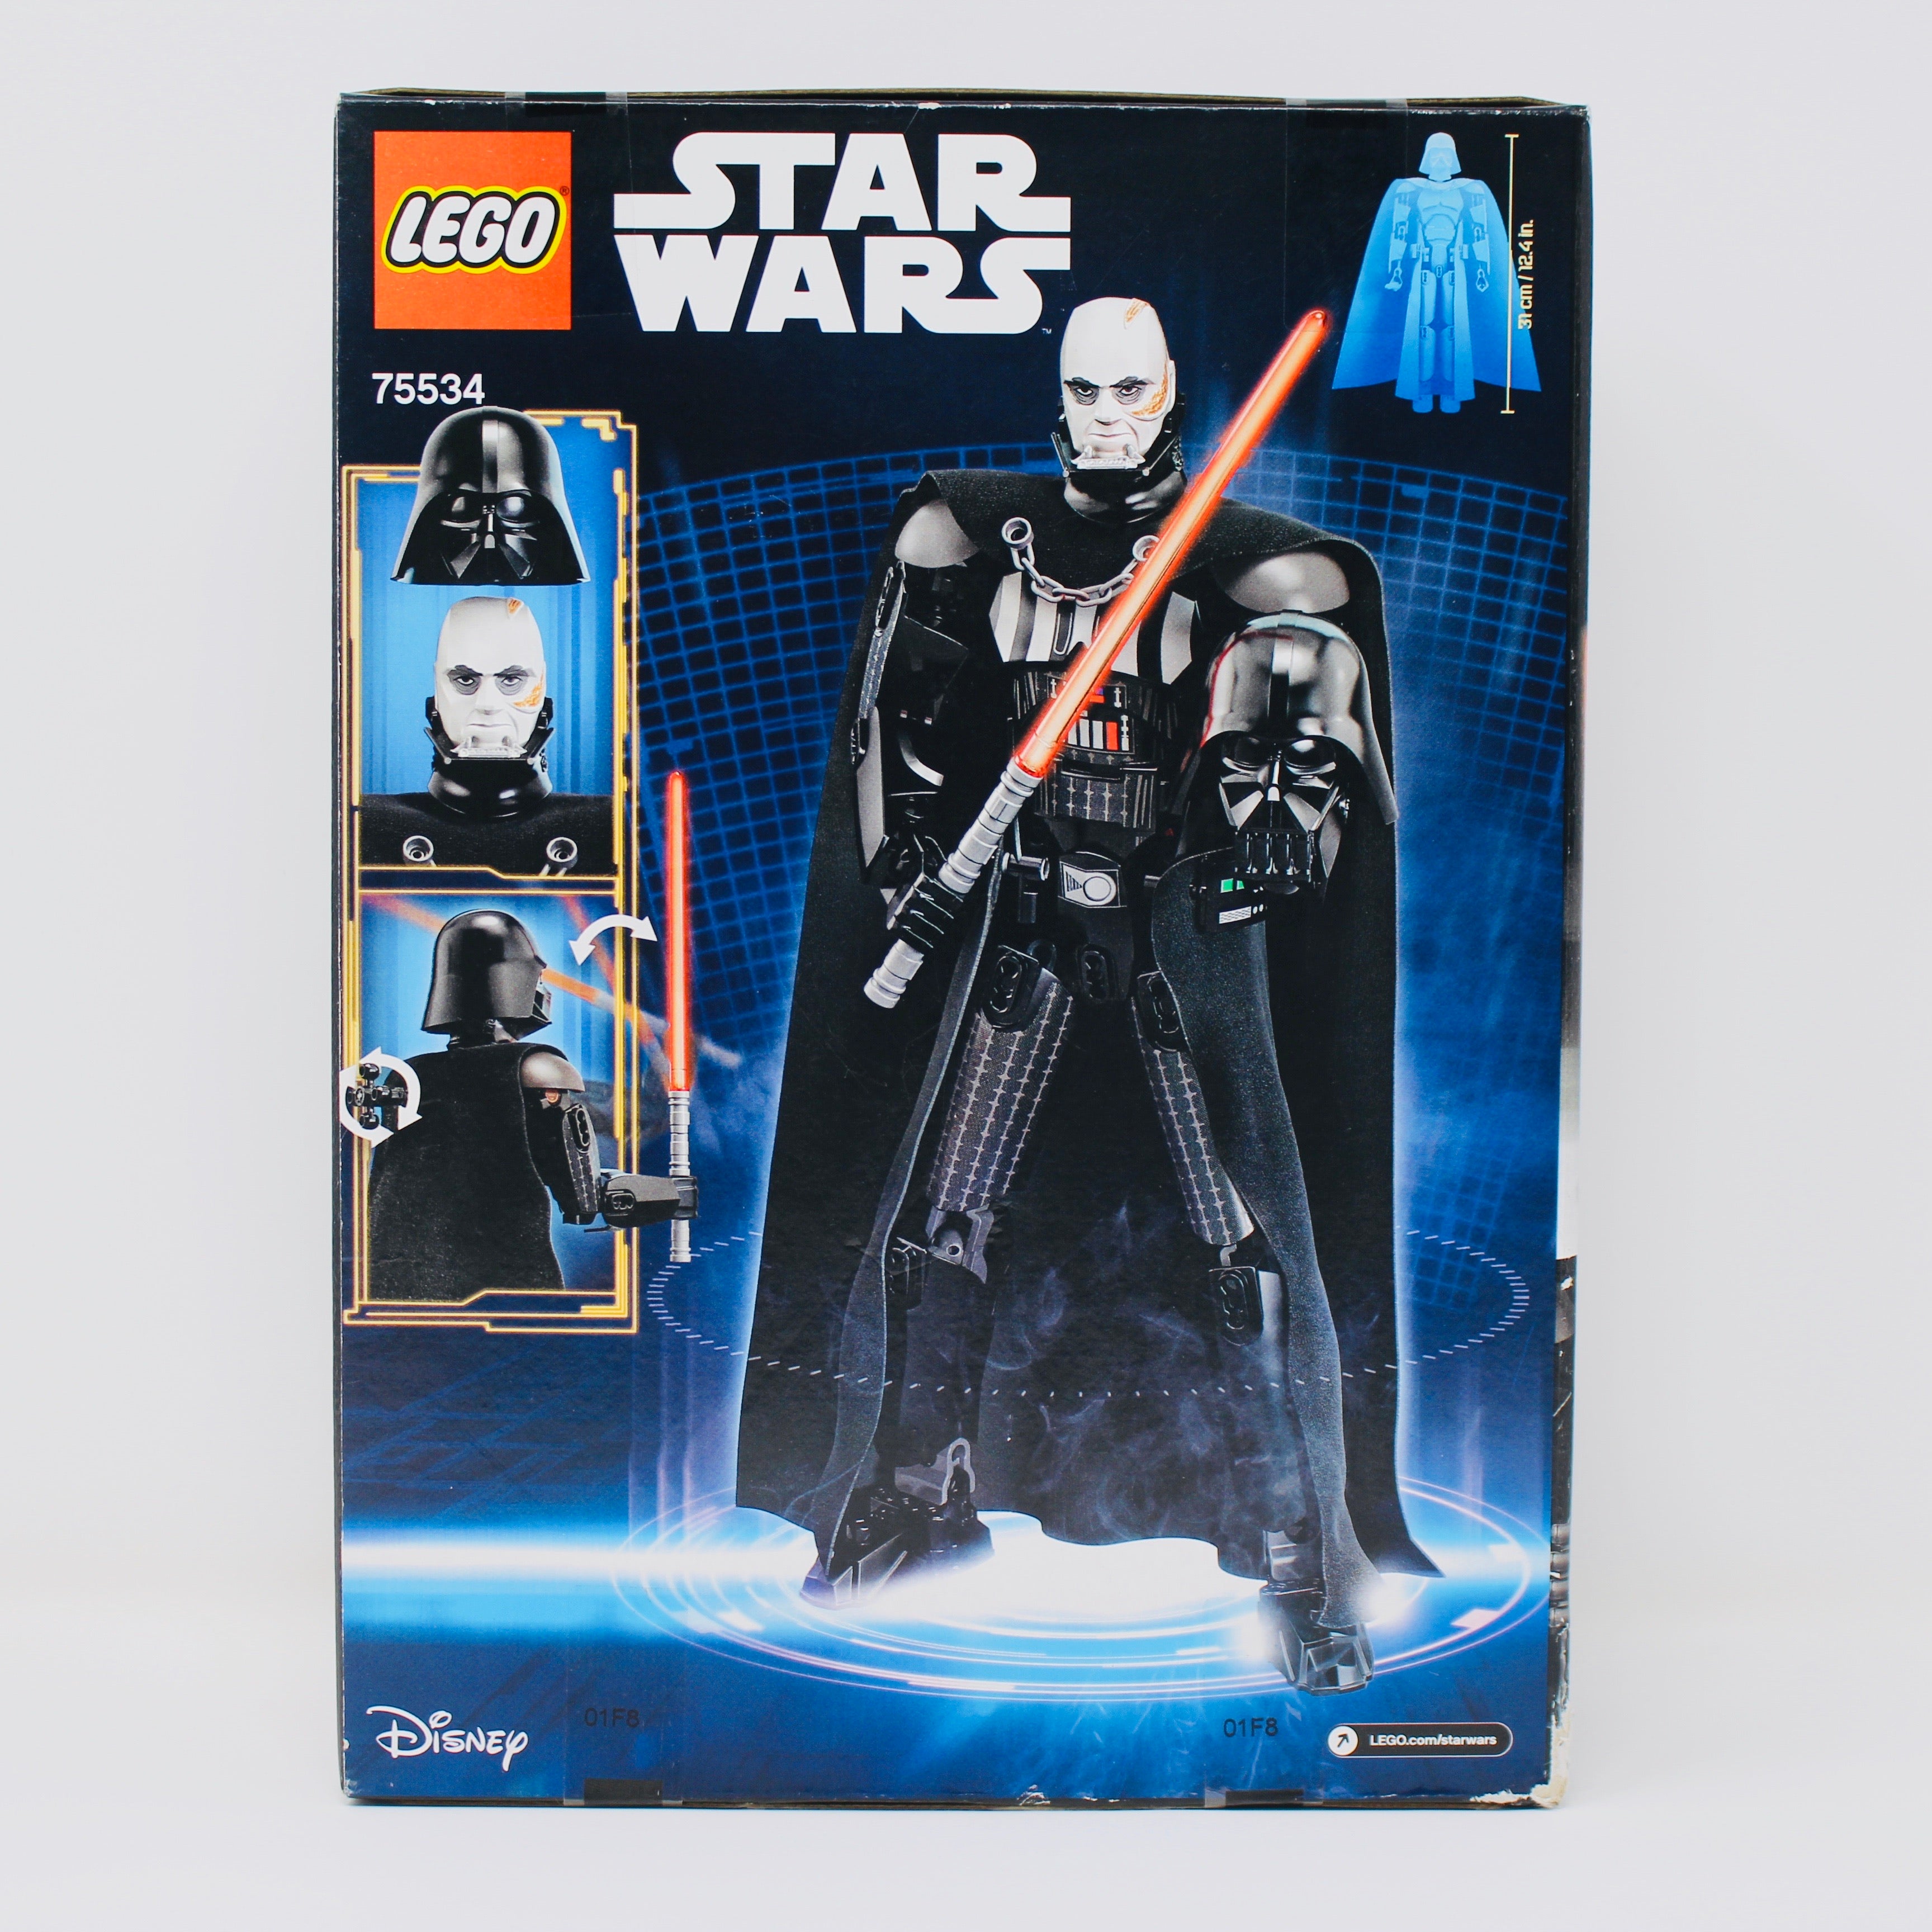 Retired Set 75534 Star Wars Buildable Figures Darth Vader